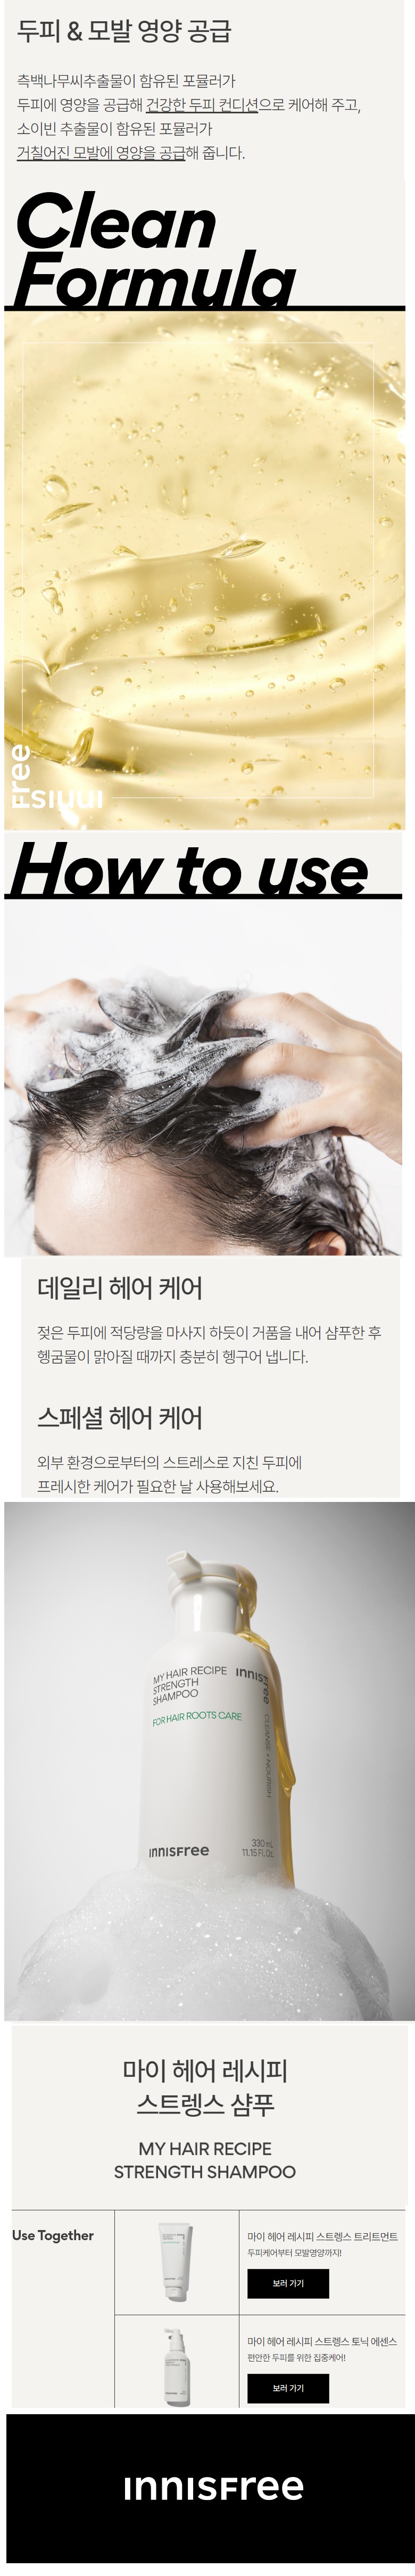 Innisfree My Hair Recipe Strength Shampoo For Hair Roots Care korean skincare product online shop malaysia denmark italy2